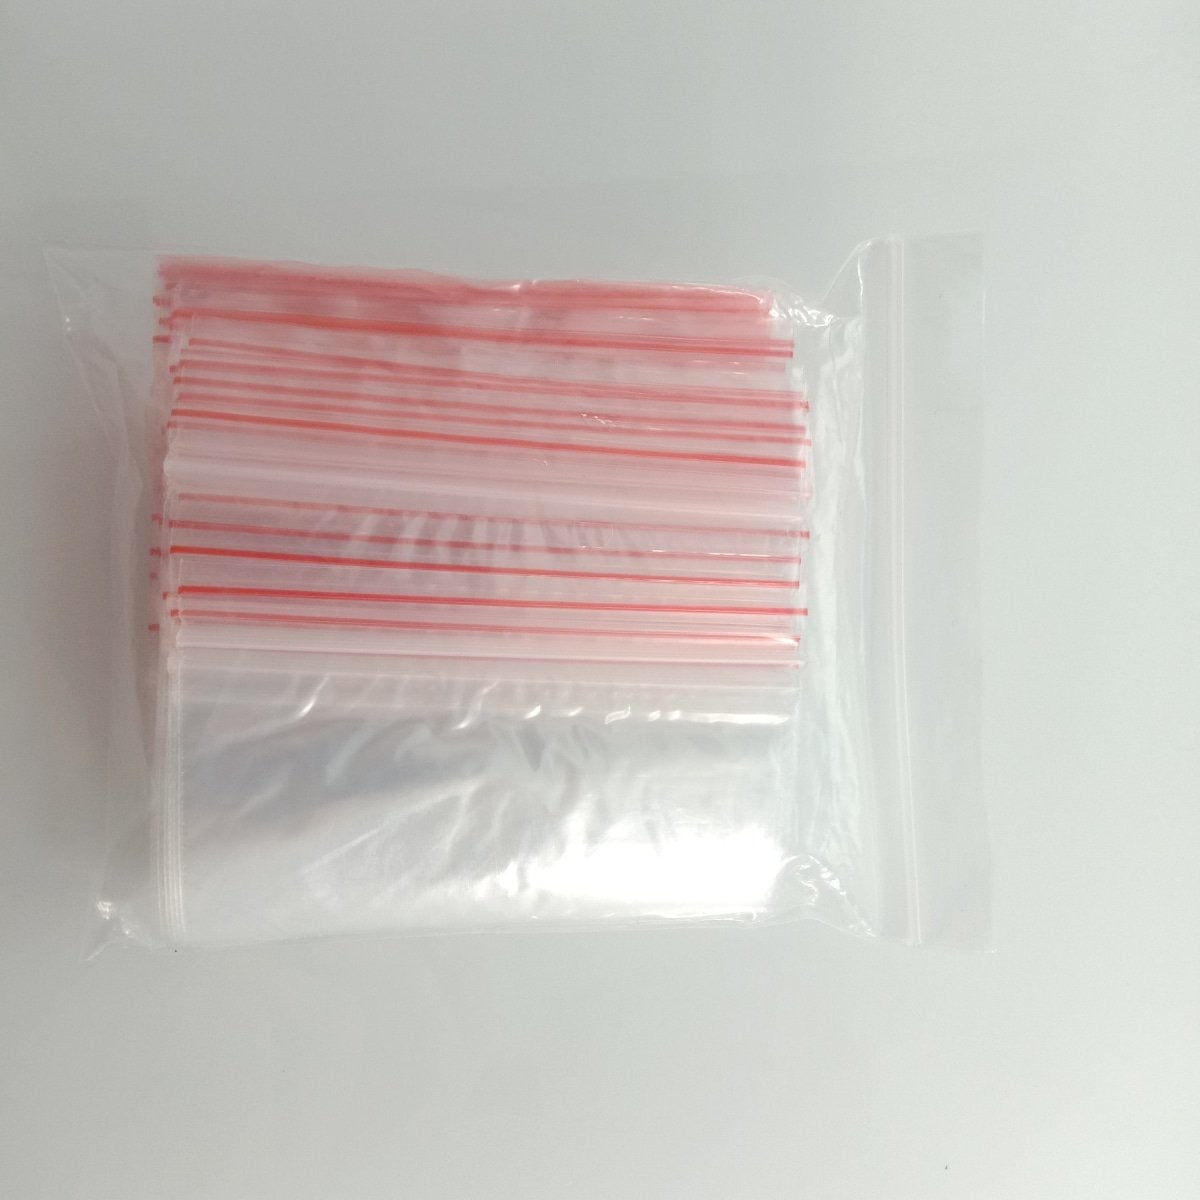 100pcs 4-15cm Plastic Zip Bags Clipseal Sealer Satchels Decent Grip at Edge Thin Non-Food Safe - 8x12cm - - Asia Sell